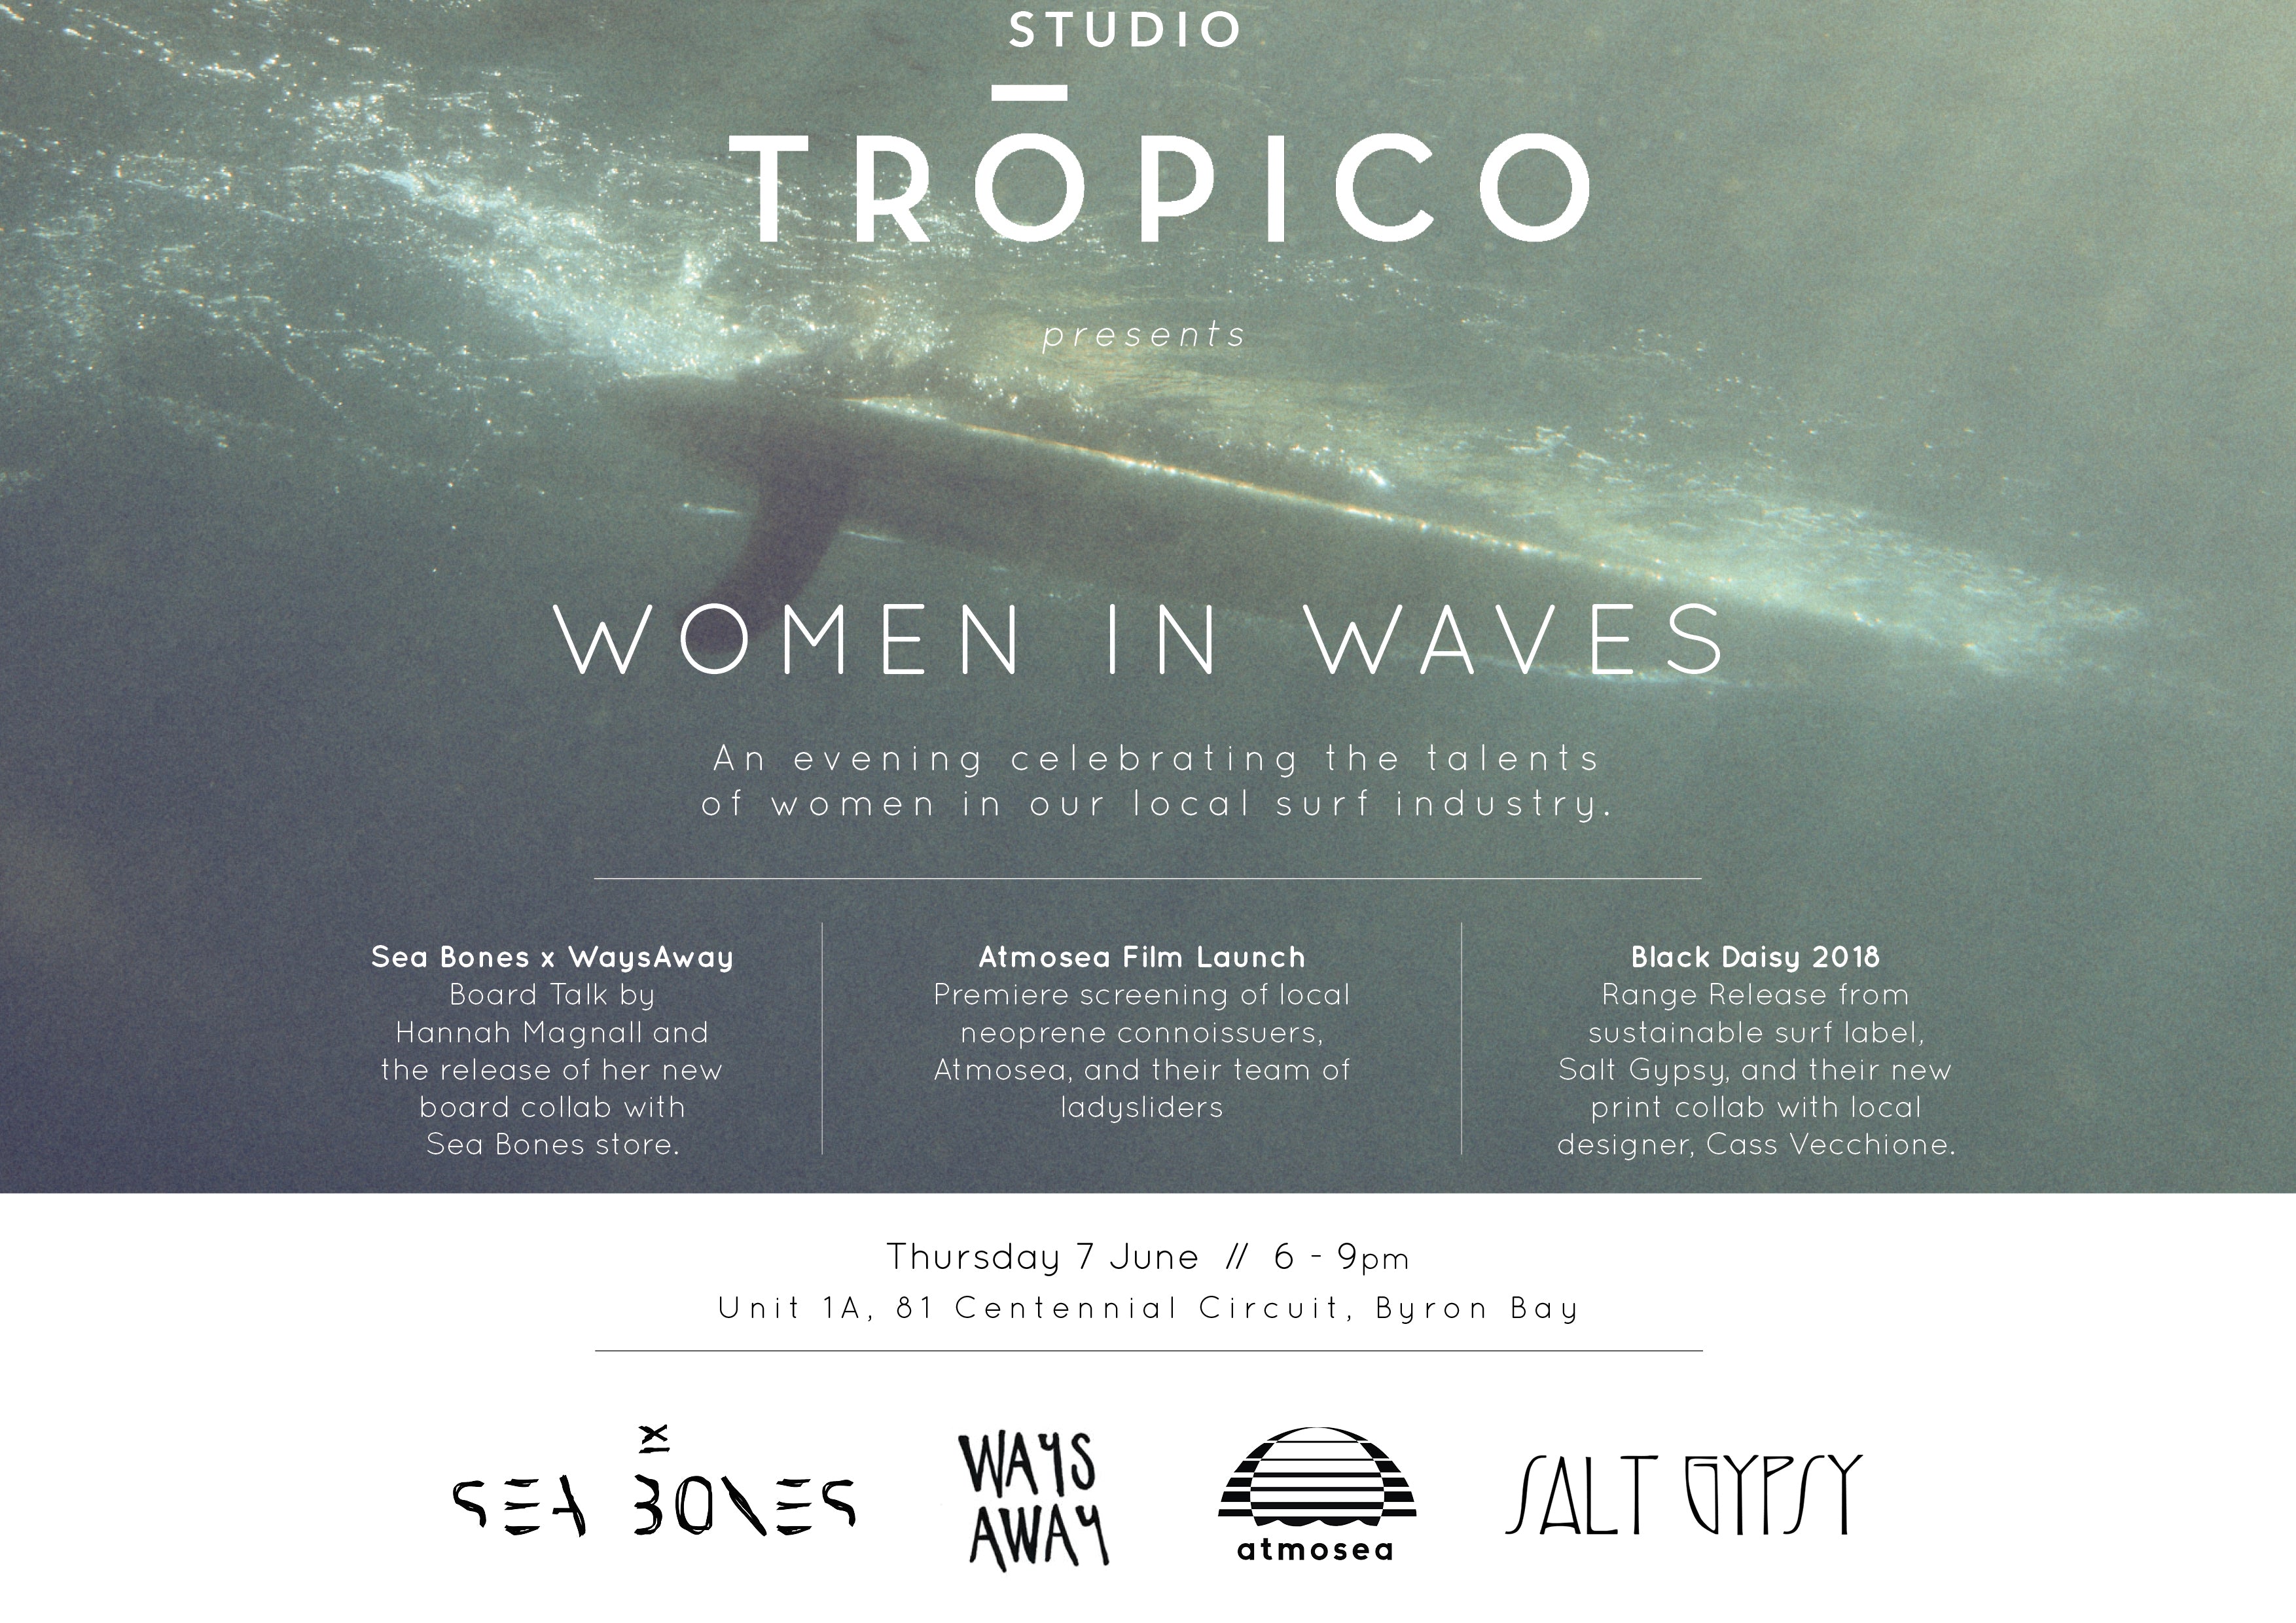 STUDIO TROPICO PRESENTS WOMEN IN WAVES